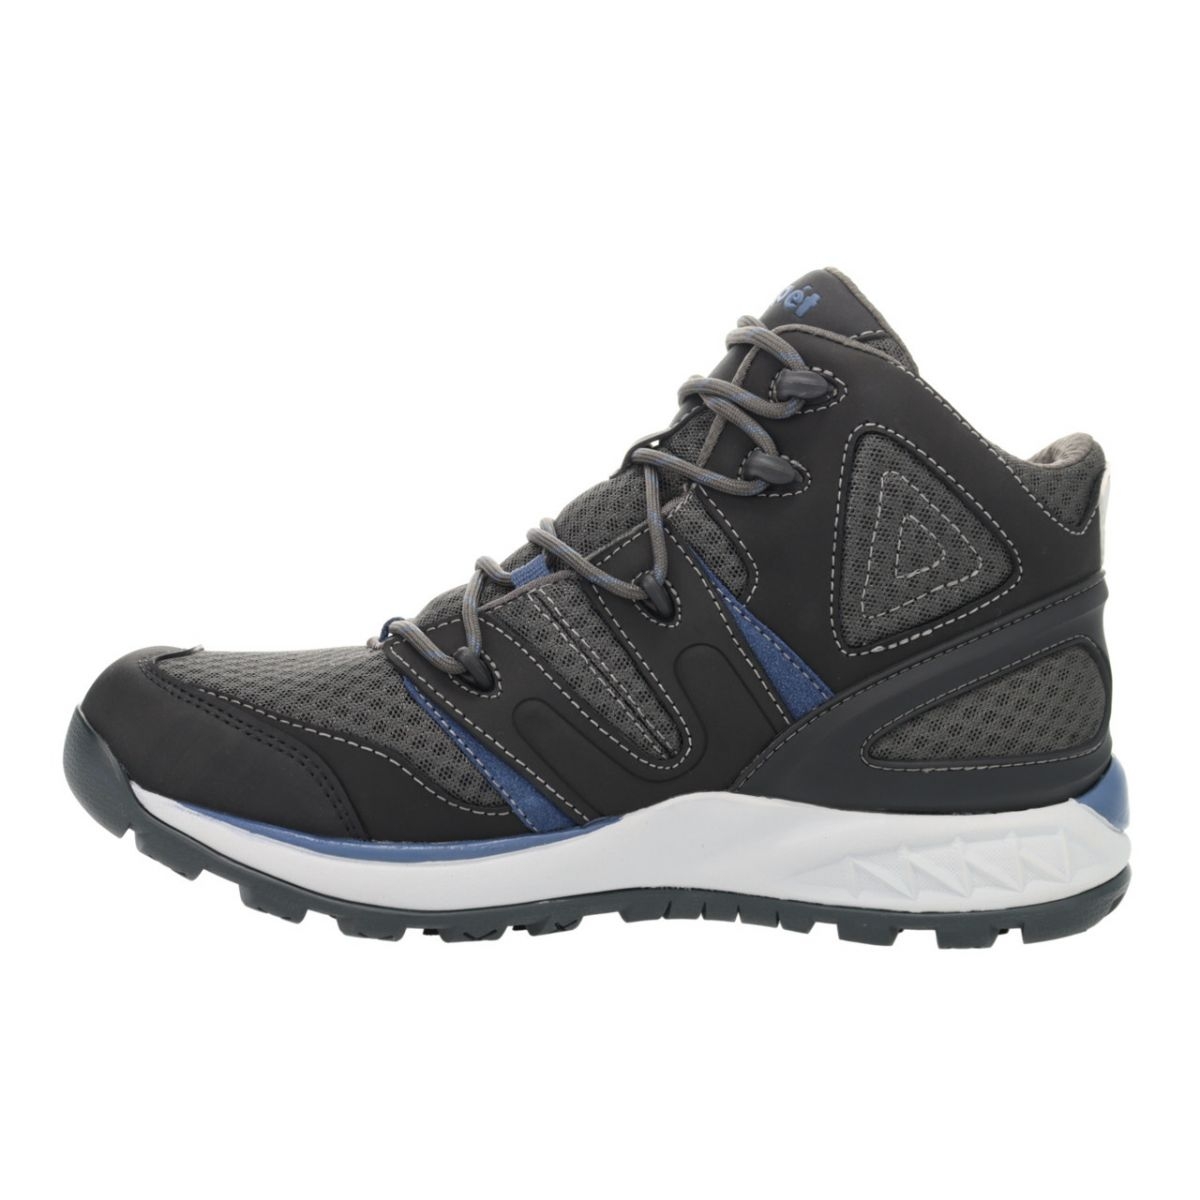 Propet Men's Veymont Waterproof Hiking Boot Grey/Blue - MOA022SGRB GREY/BLUE - GREY/BLUE, 15